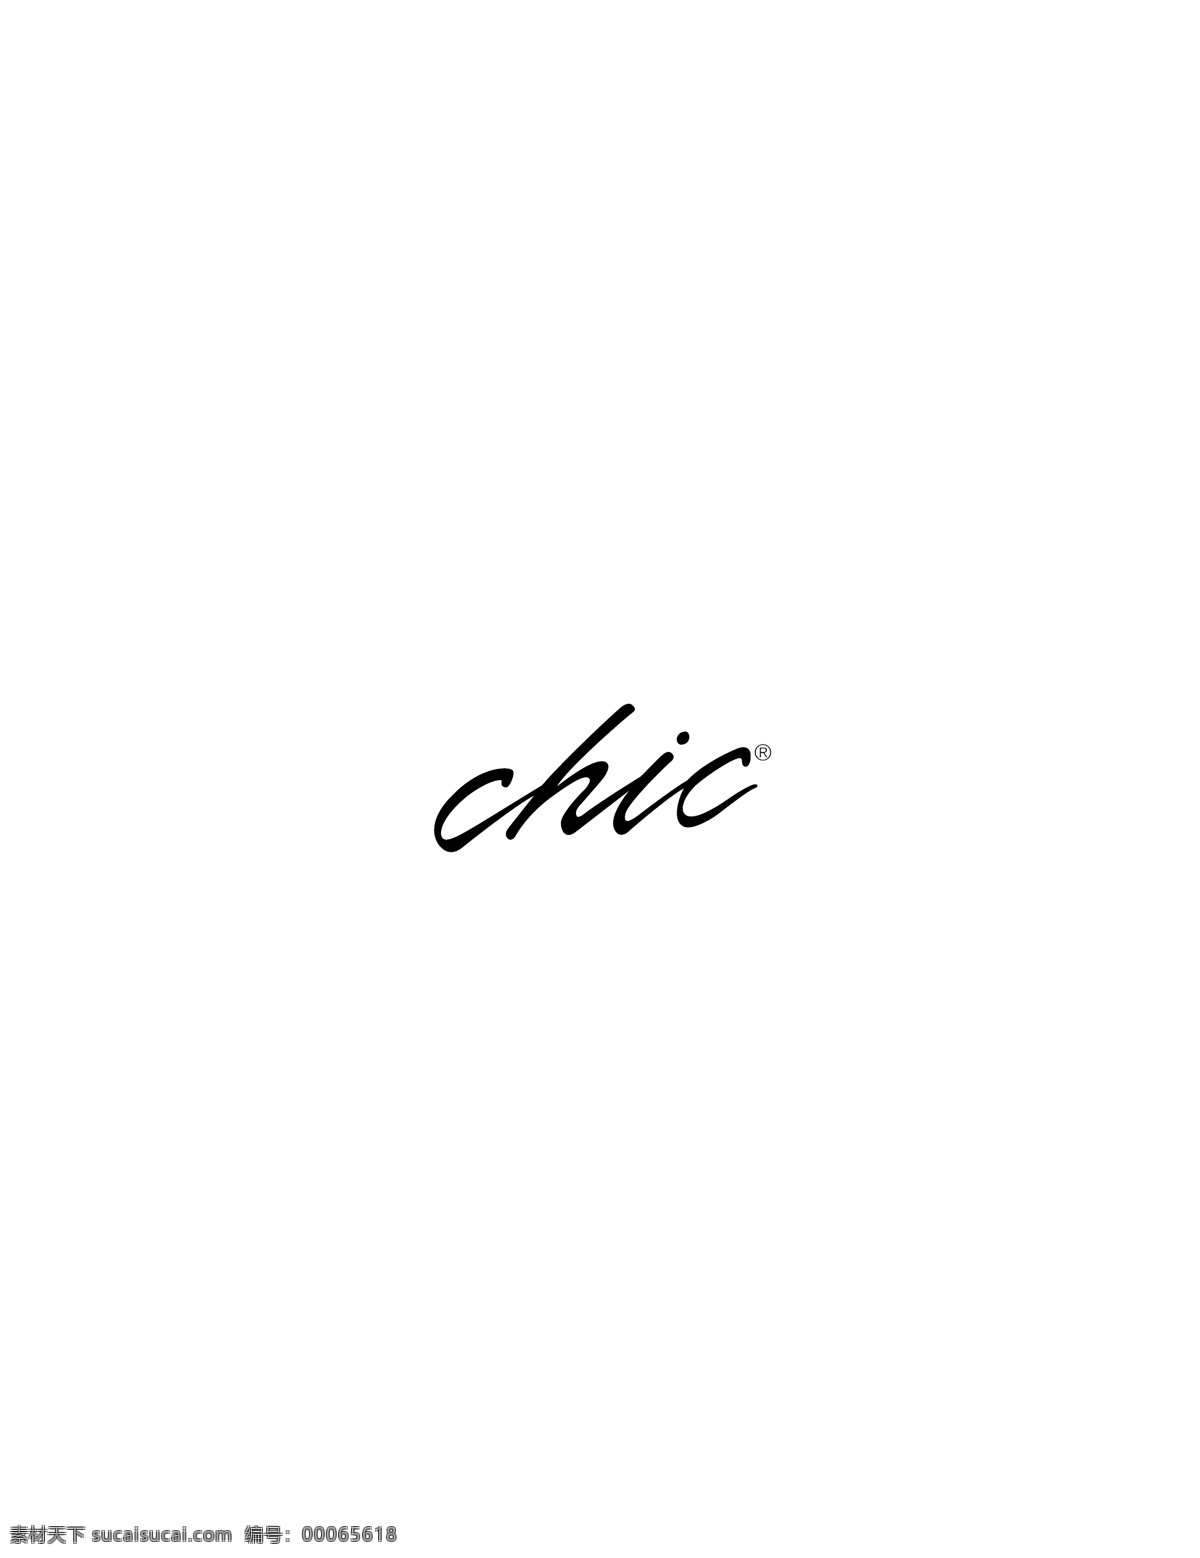 chic logo大全 logo 设计欣赏 商业矢量 矢量下载 服饰 品牌 标志 标志设计 欣赏 网页矢量 矢量图 其他矢量图